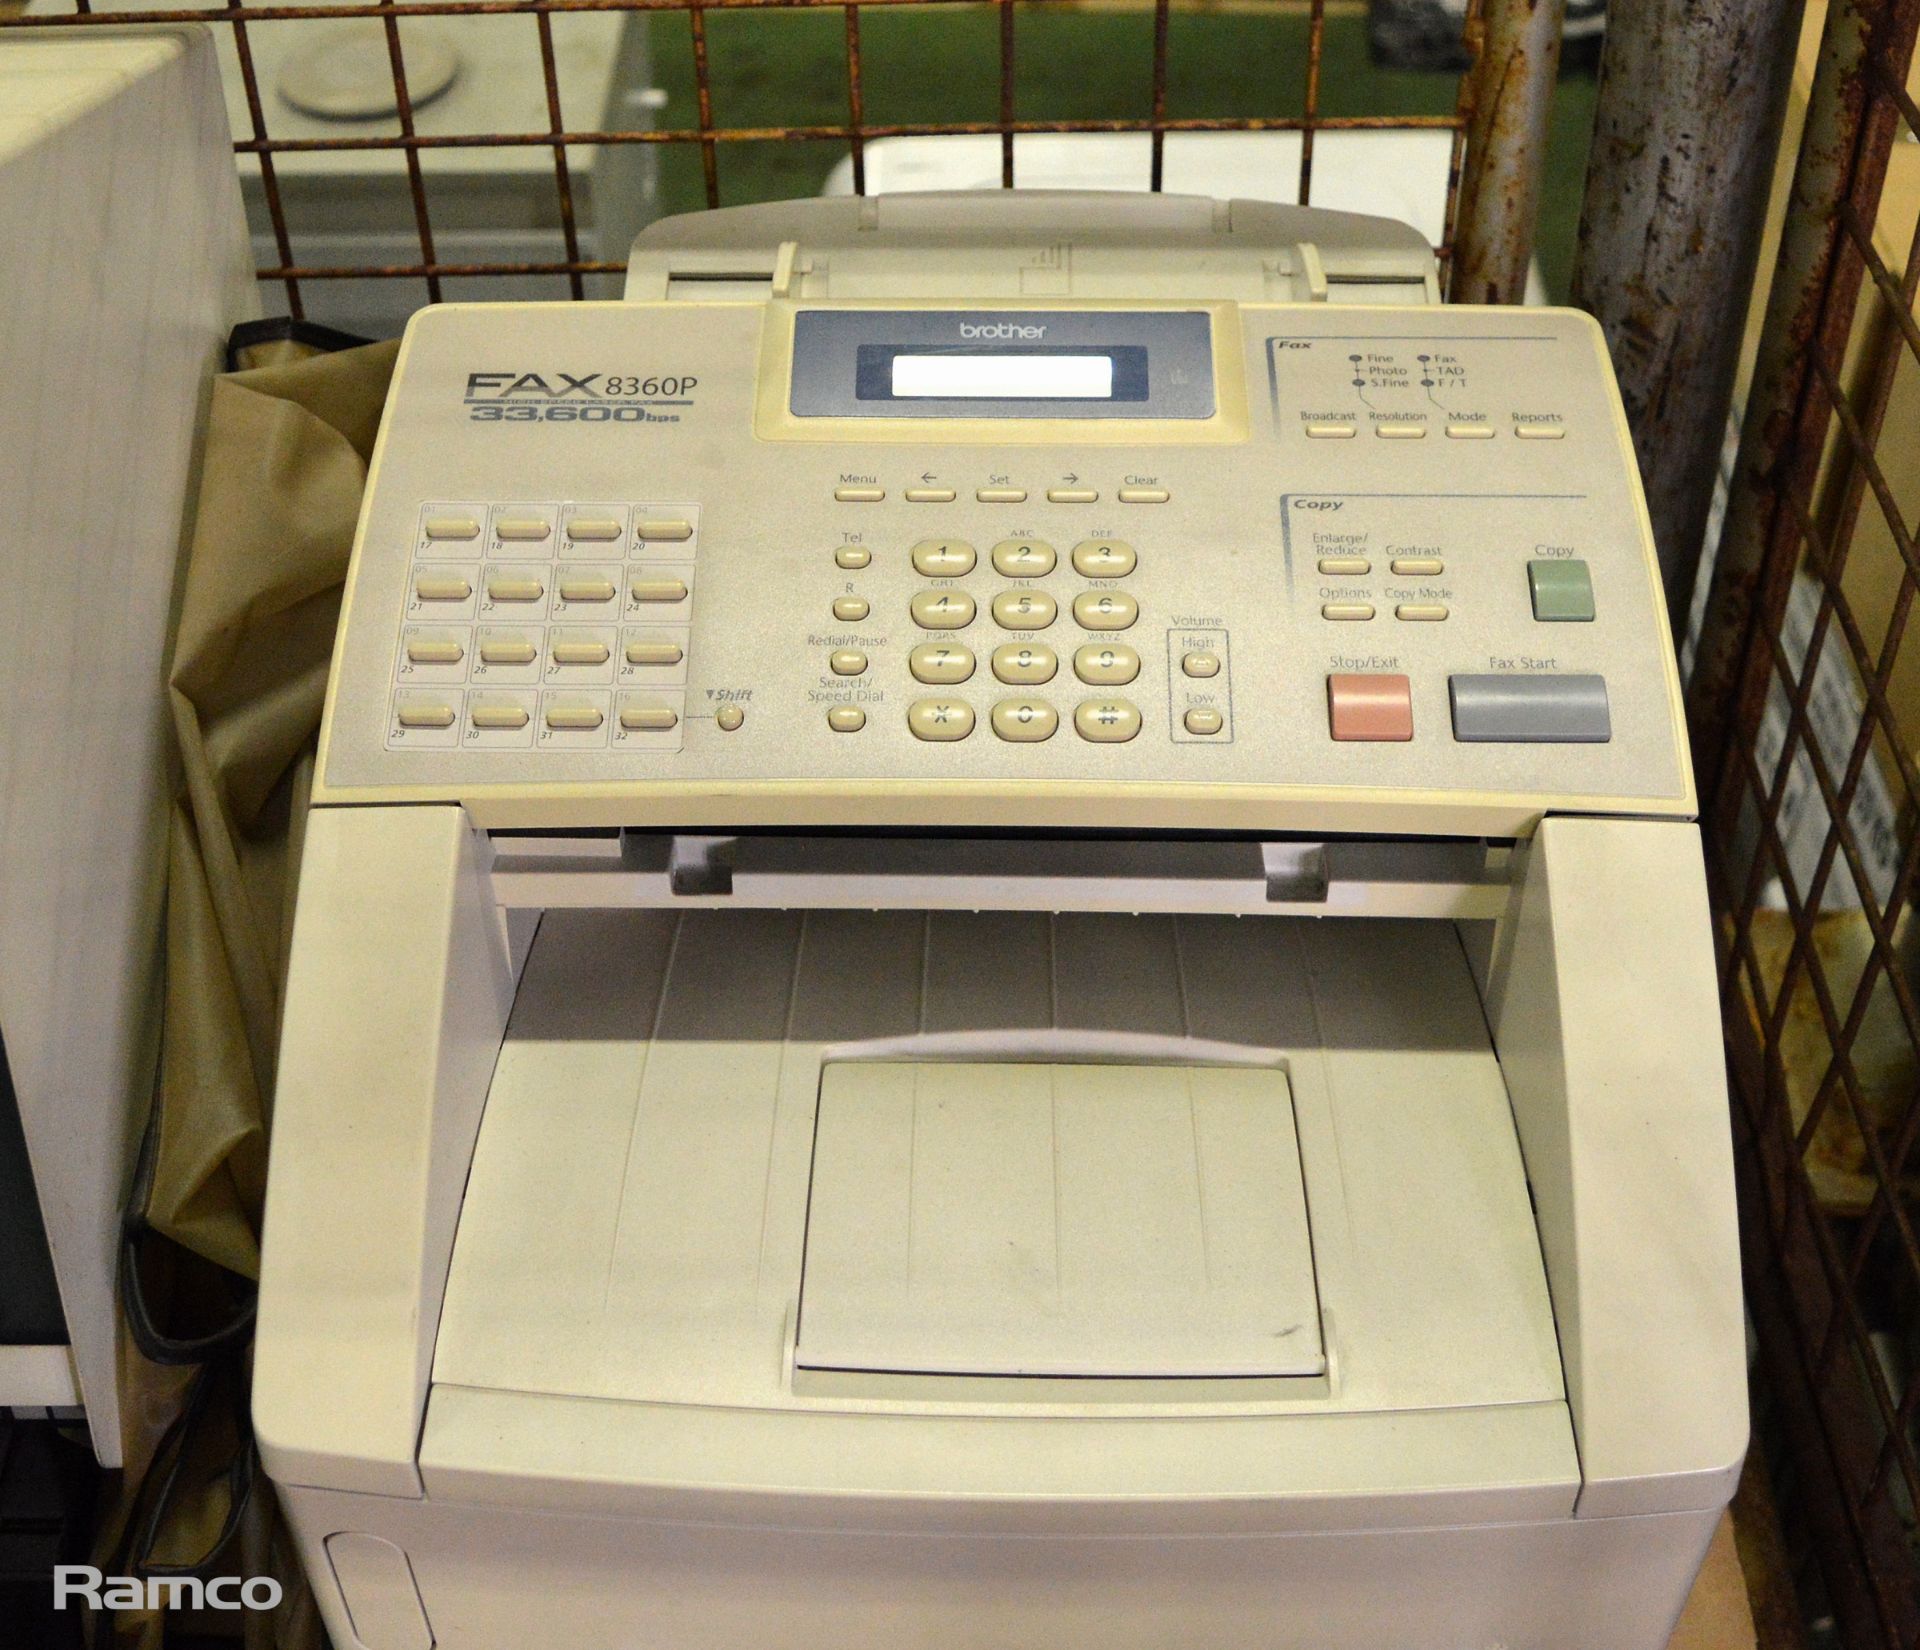 Bell & Howell microfiche reader, 2x Fax machines, desk phones, Avaya IP500 V2 network hub - Image 5 of 7